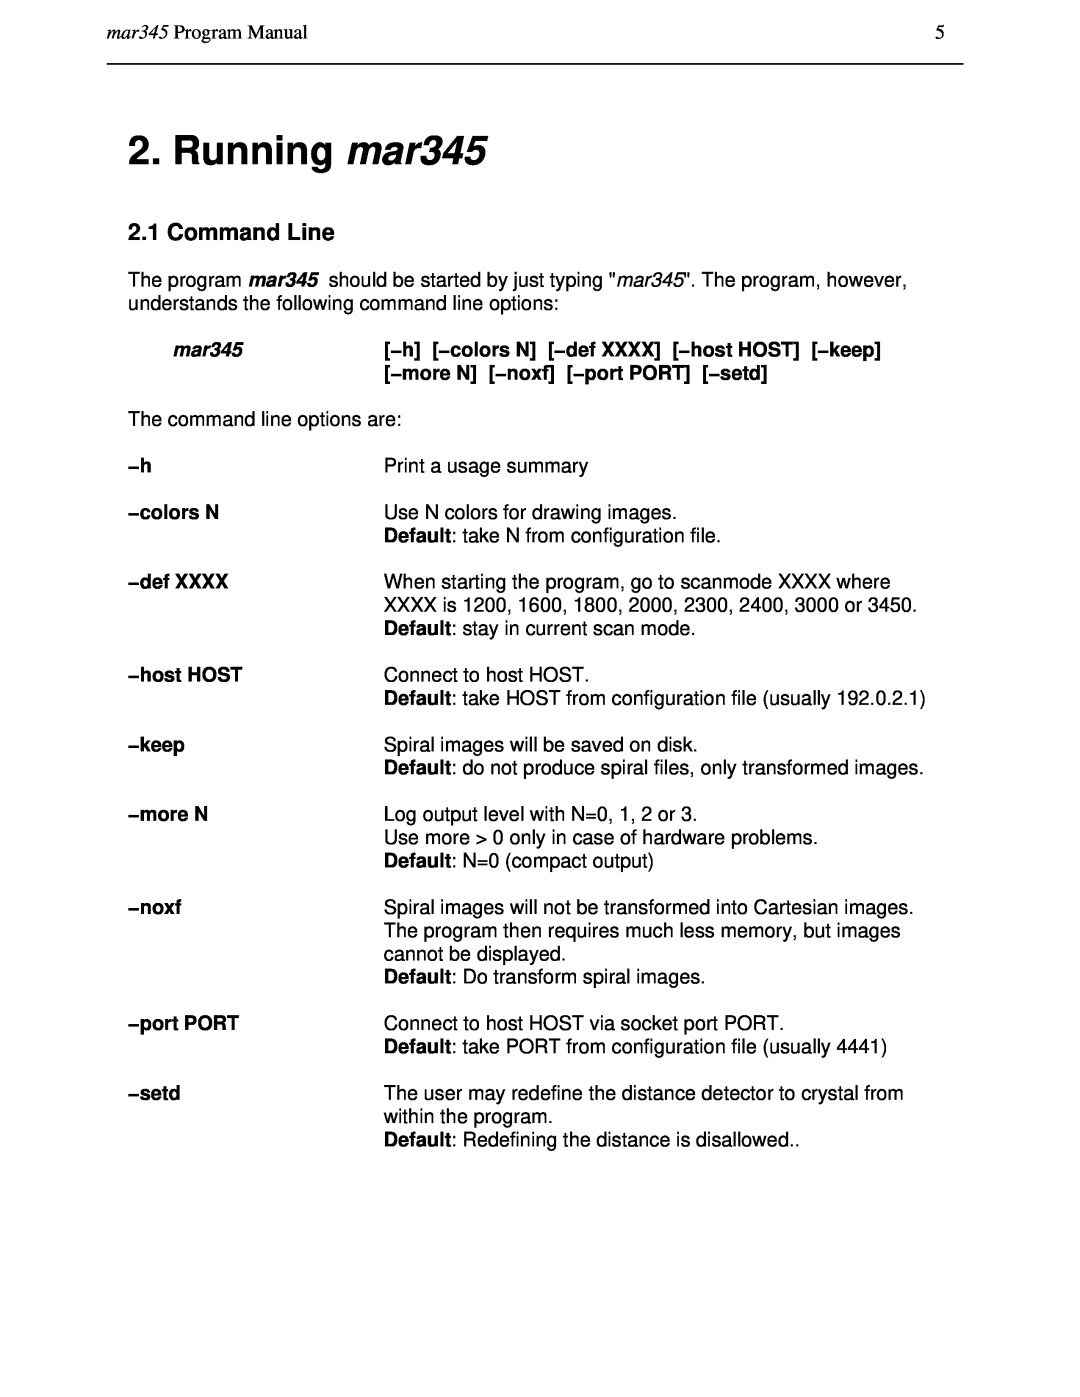 Compaq manual Running mar345, Command Line, mar345 Program Manual 